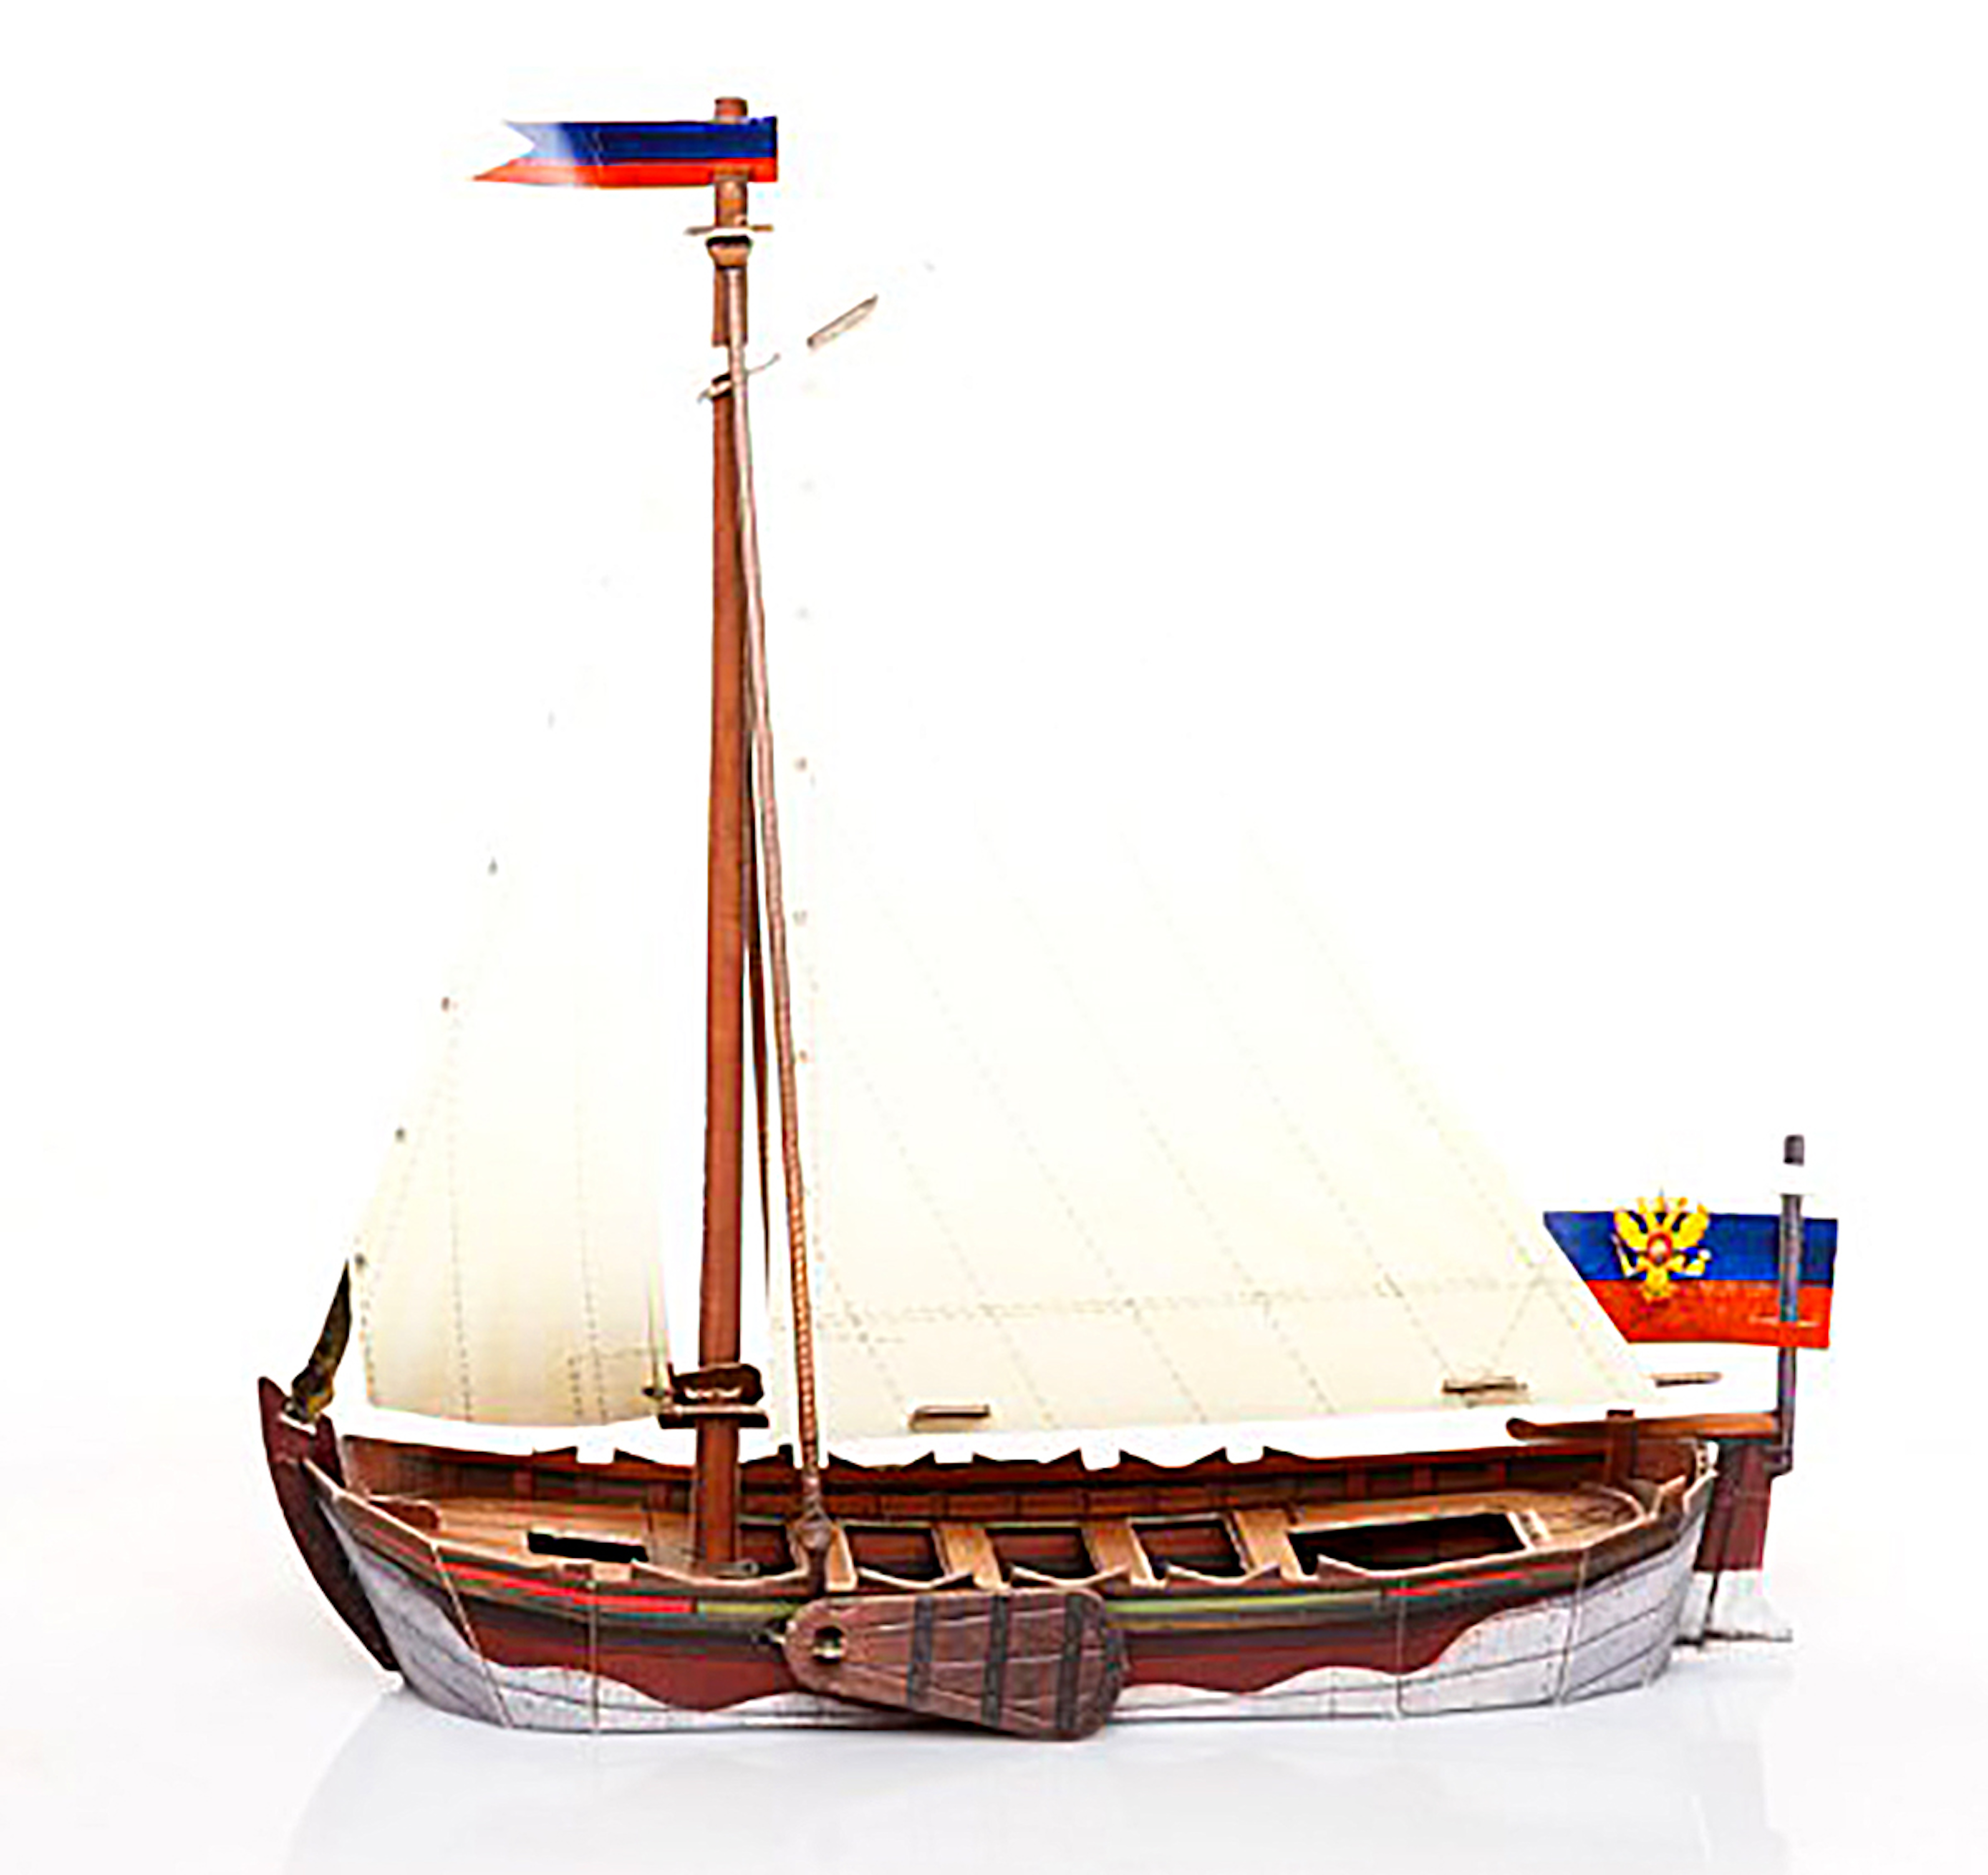 3D Puzzle KARTONMODELLBAU Papier Modell Geschenk Idee Spielzeug Boot Fortuna NEU